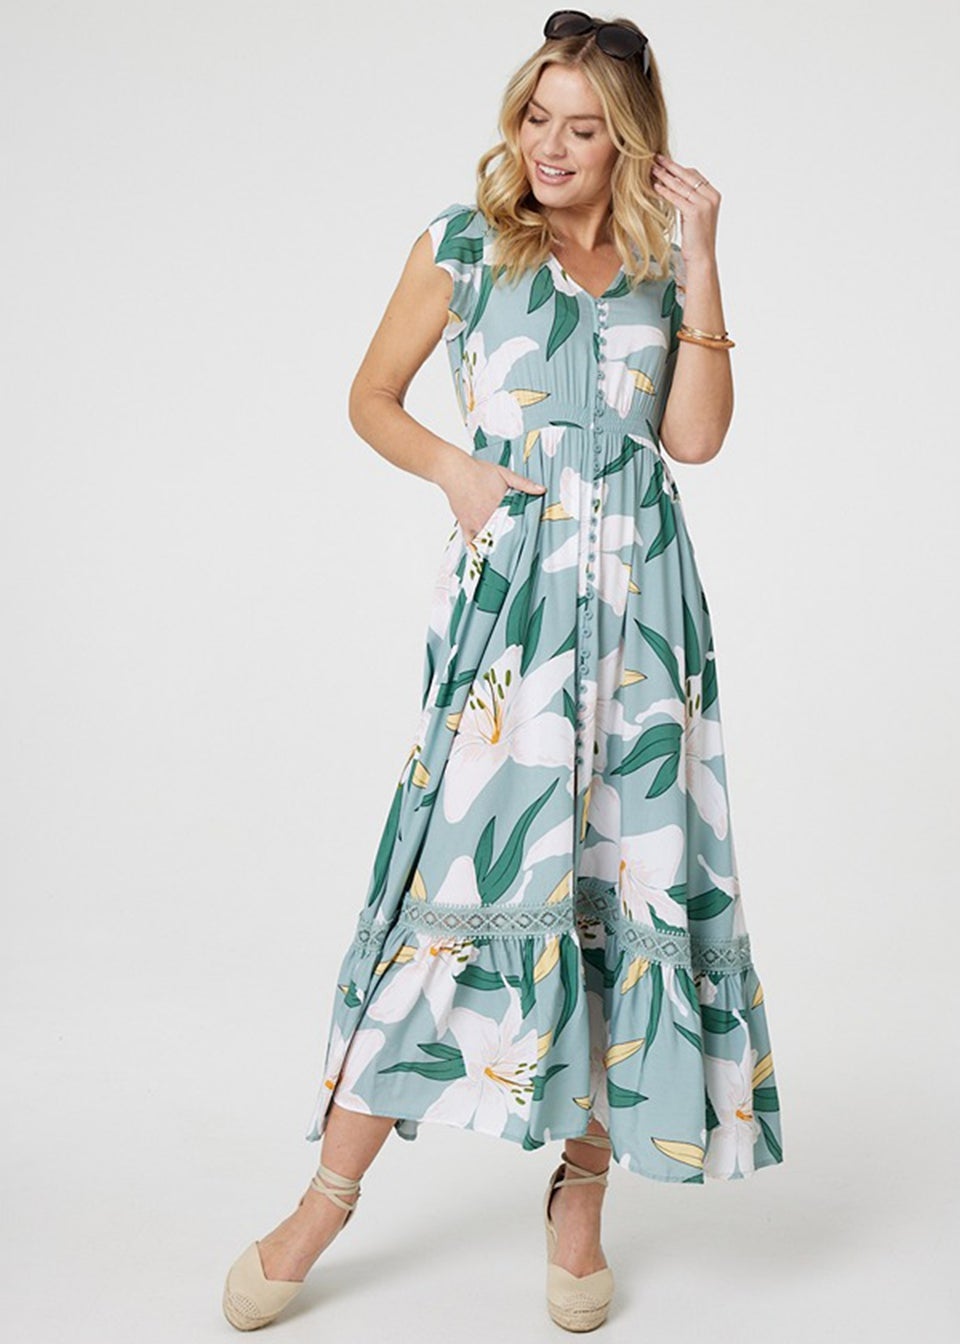 Izabel London Green Lilly Print Lace Trim Maxi Dress